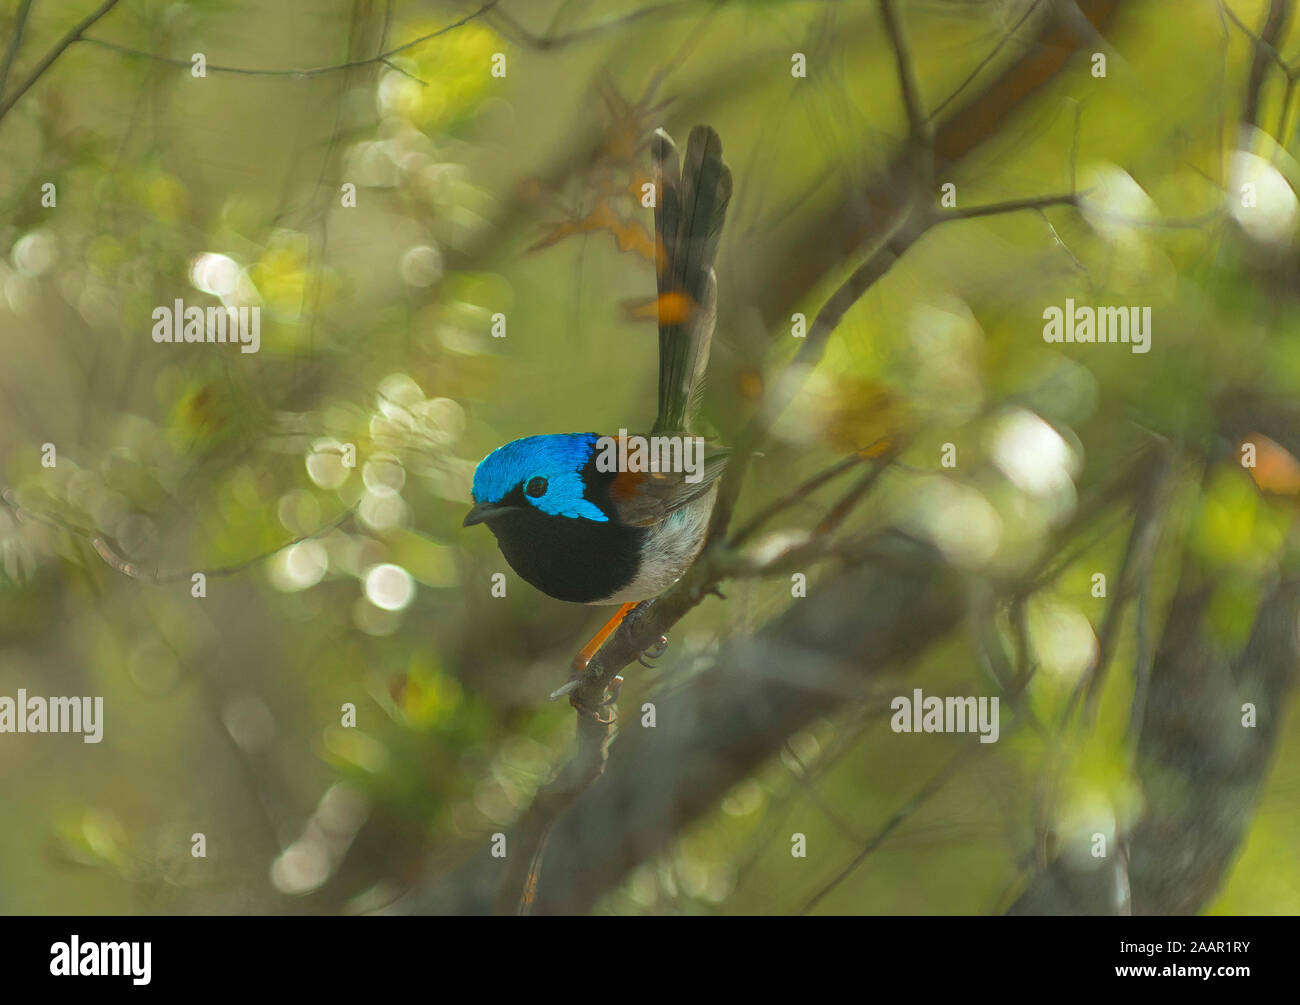 Süße vögel -Fotos und -Bildmaterial in hoher Auflösung – Alamy